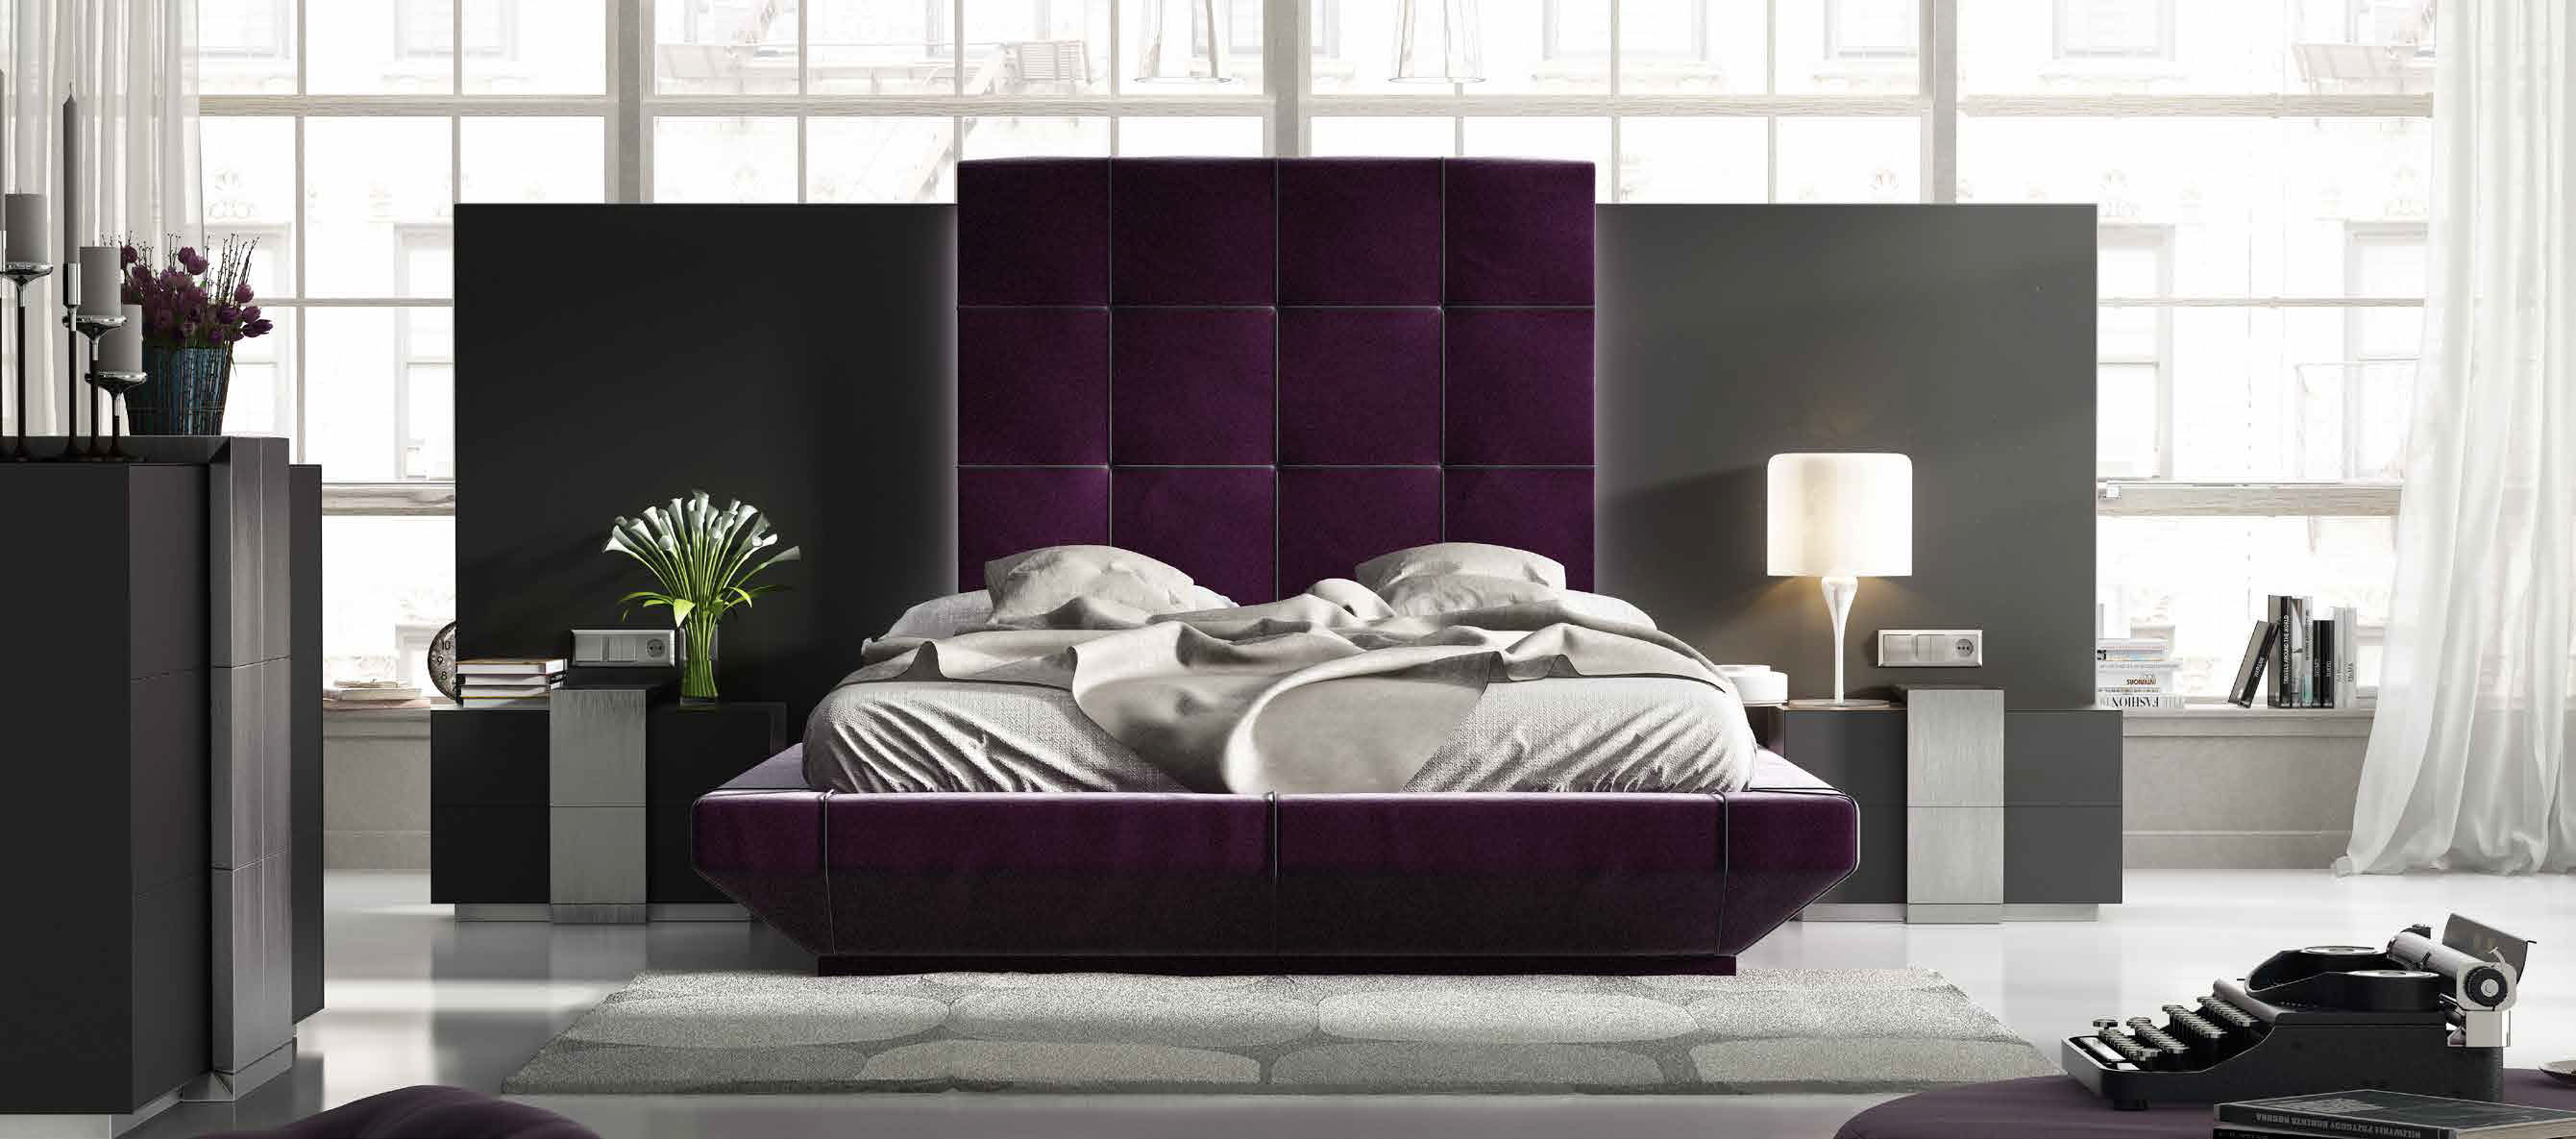 Brands Franco Furniture Bedrooms vol3, Spain DOR 01